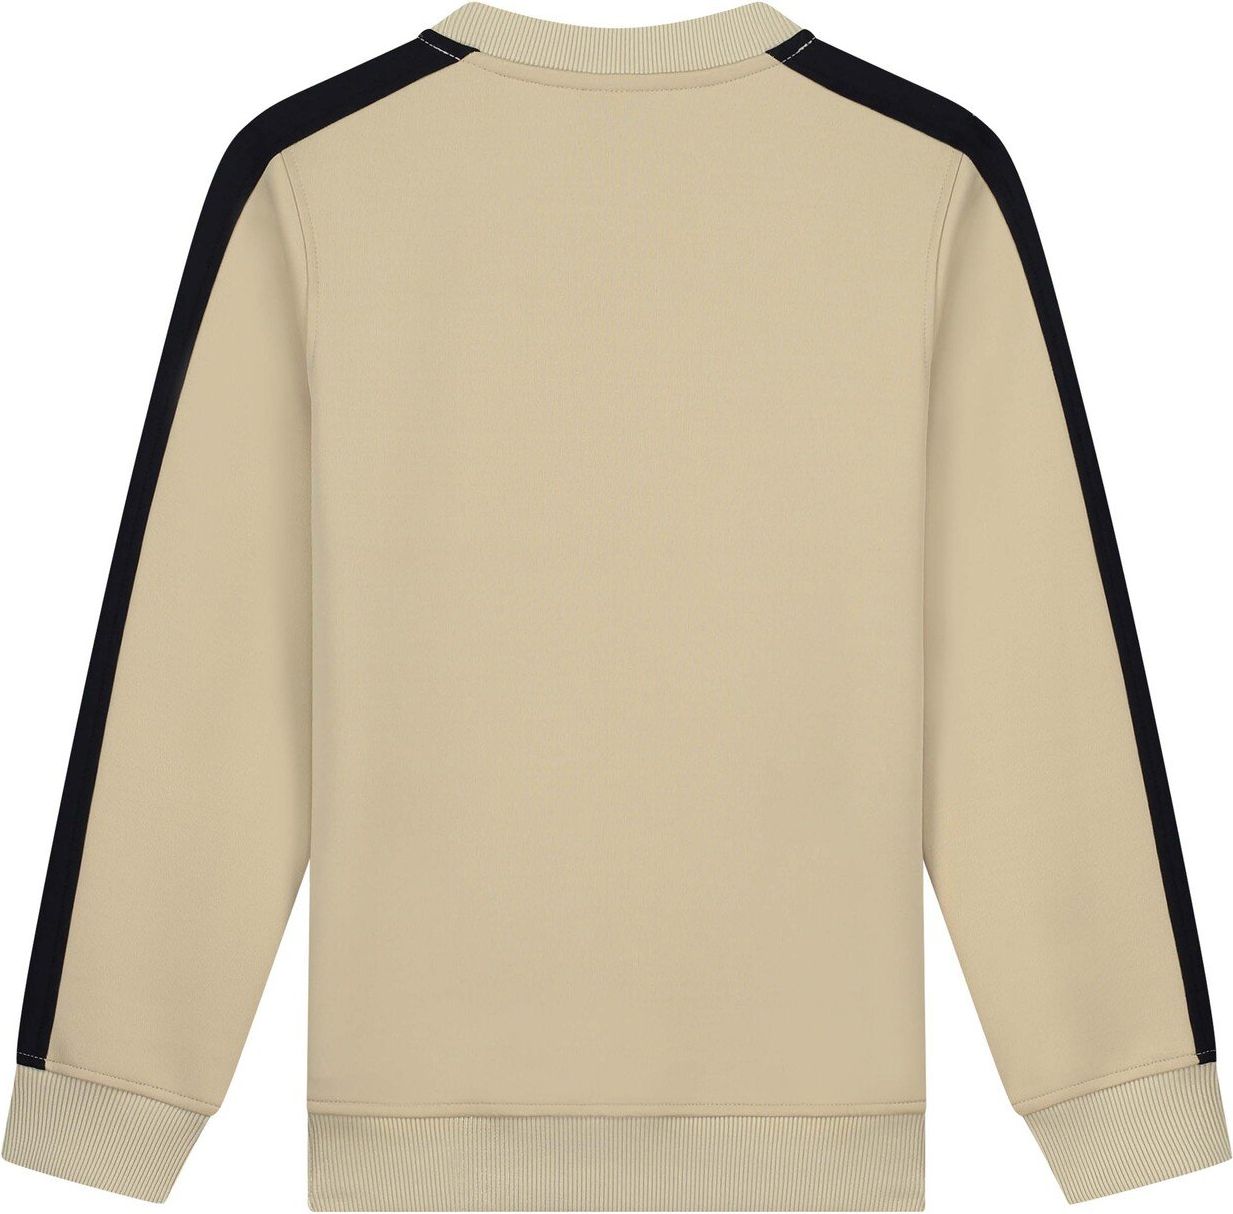 Malelions Academy Sweater - Sand/Black Beige